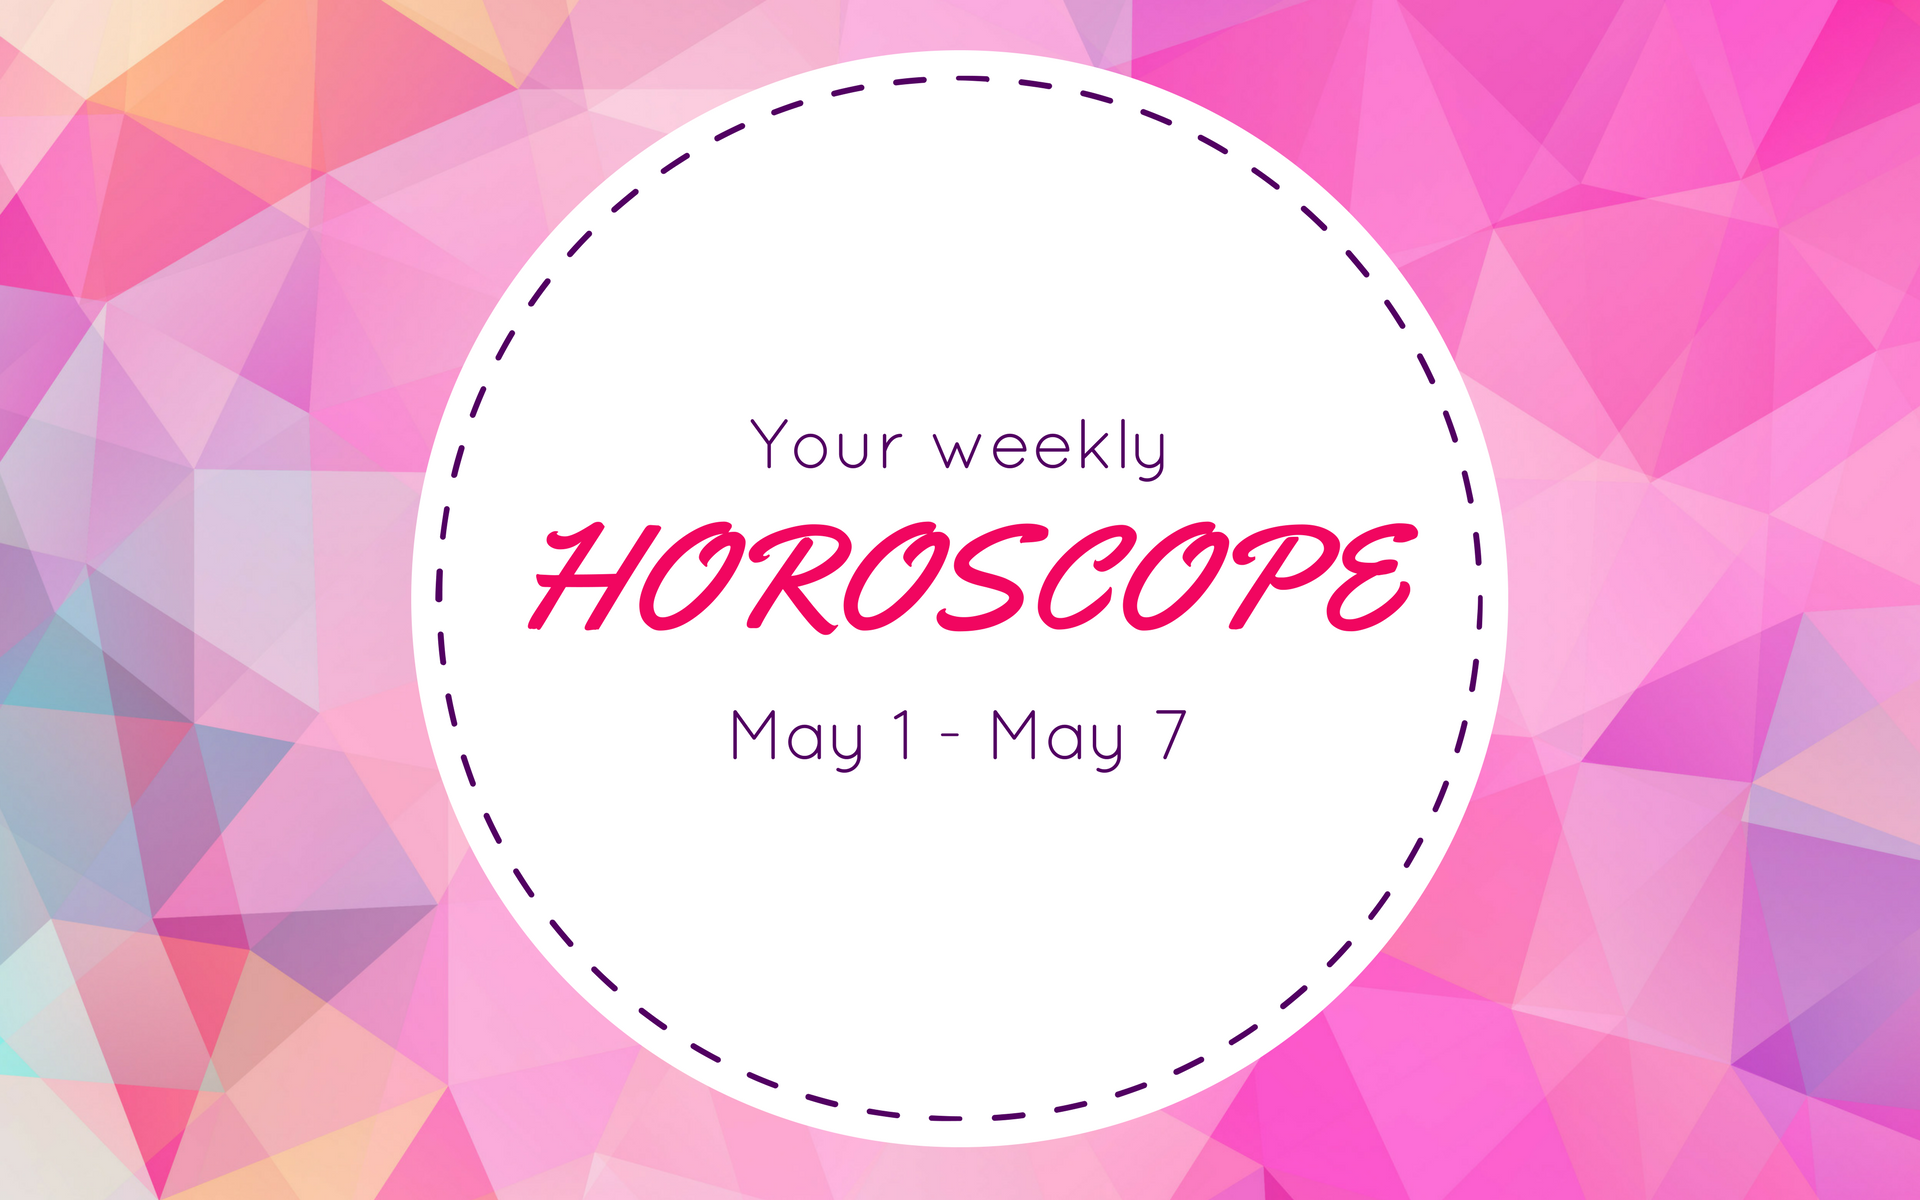 Your Weekly Horoscope: May 1 - May 7